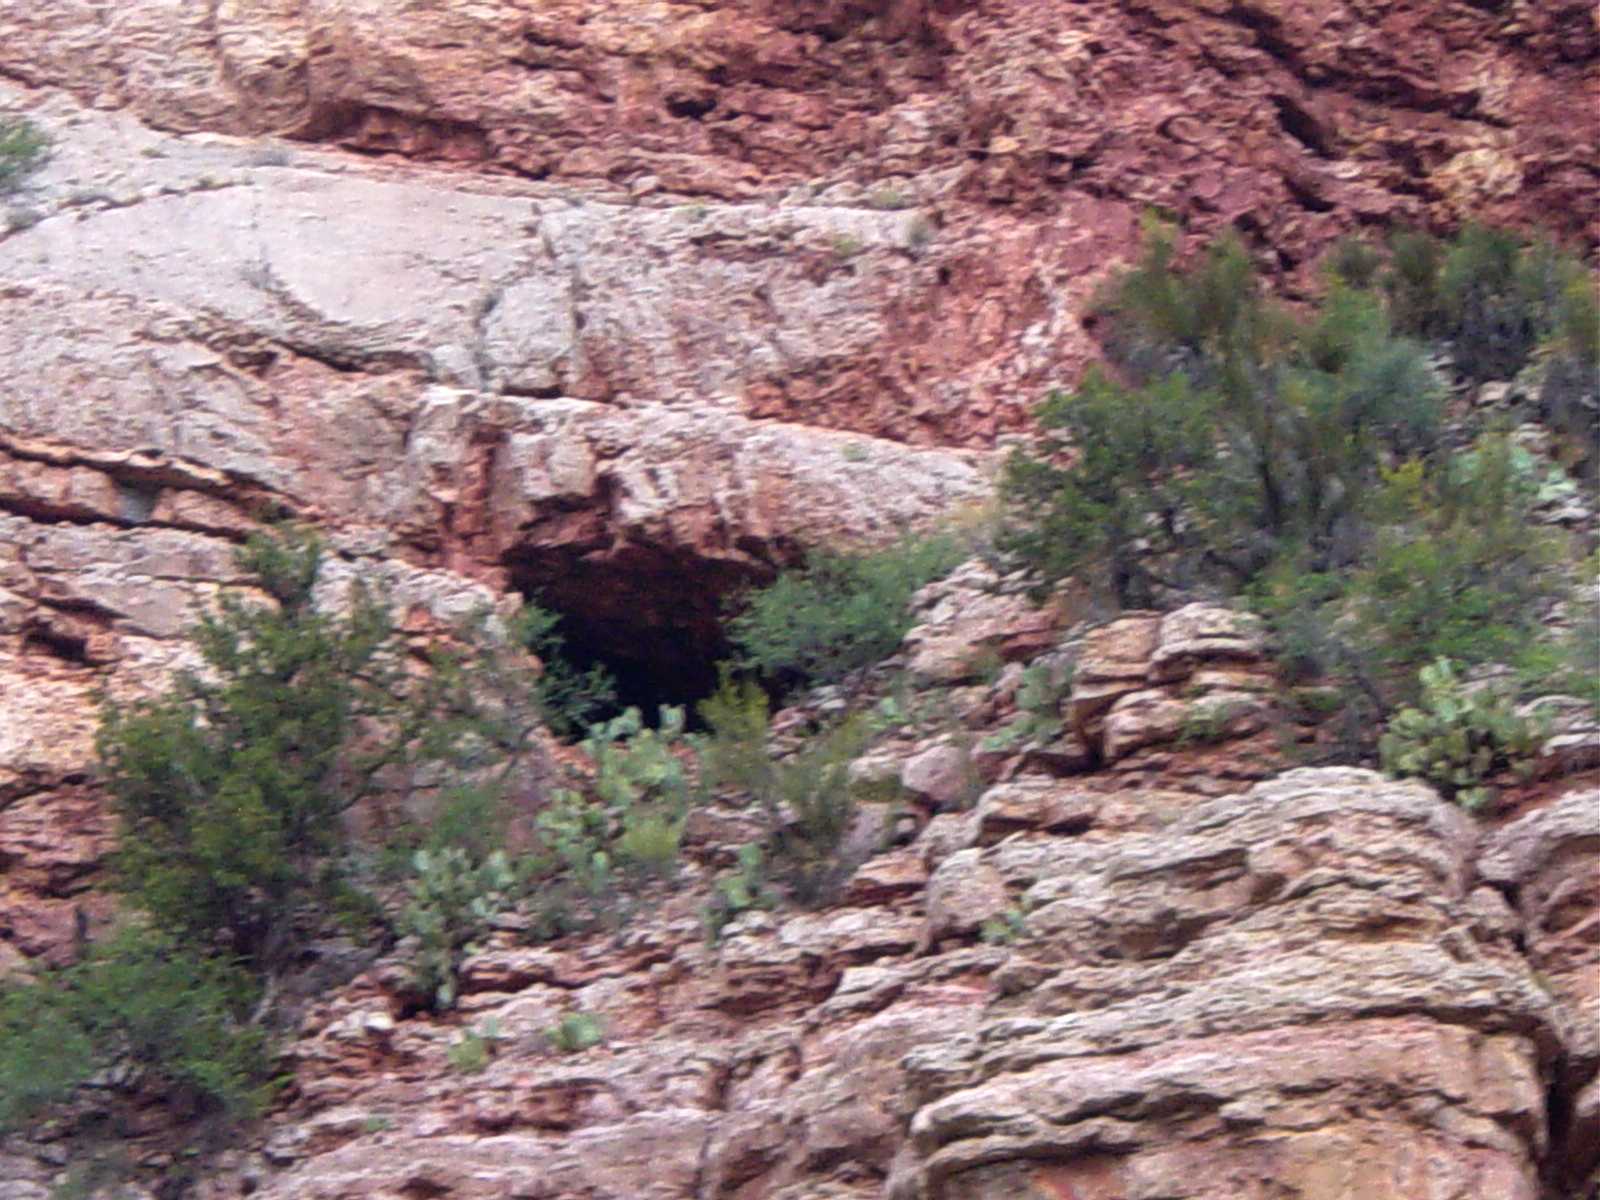 Rock caves